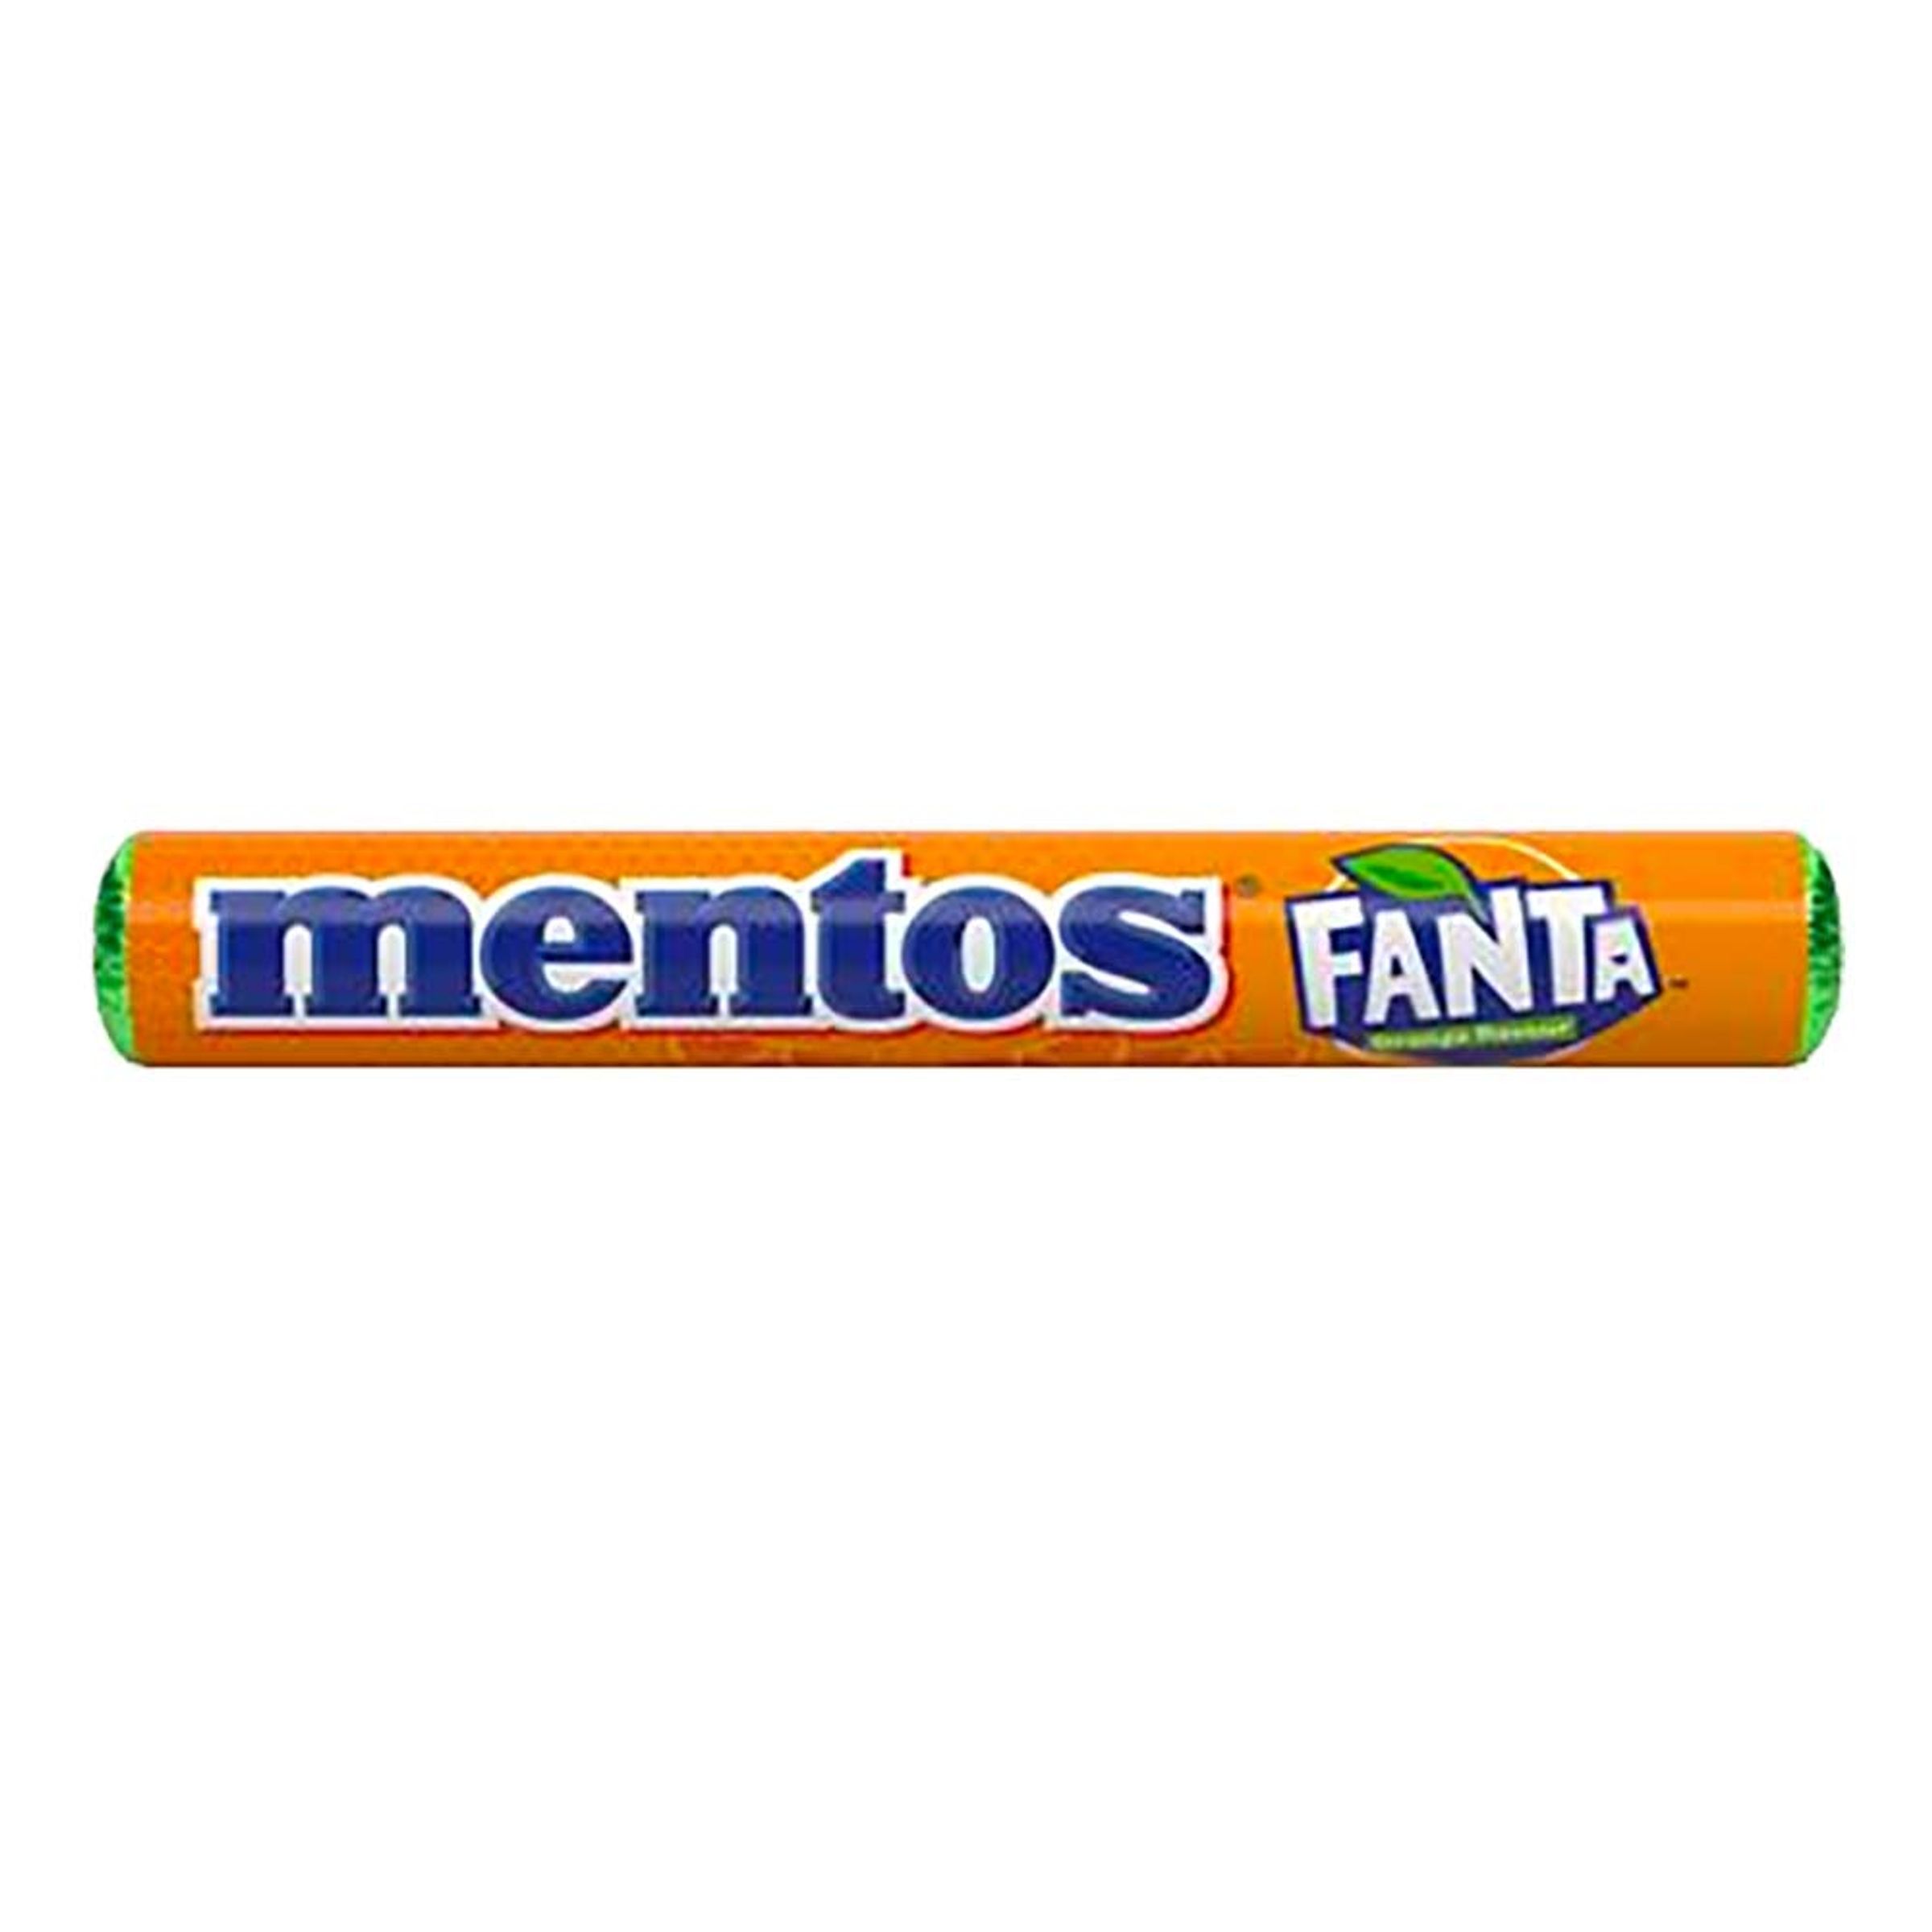 Mentos Fanta Orange - 37